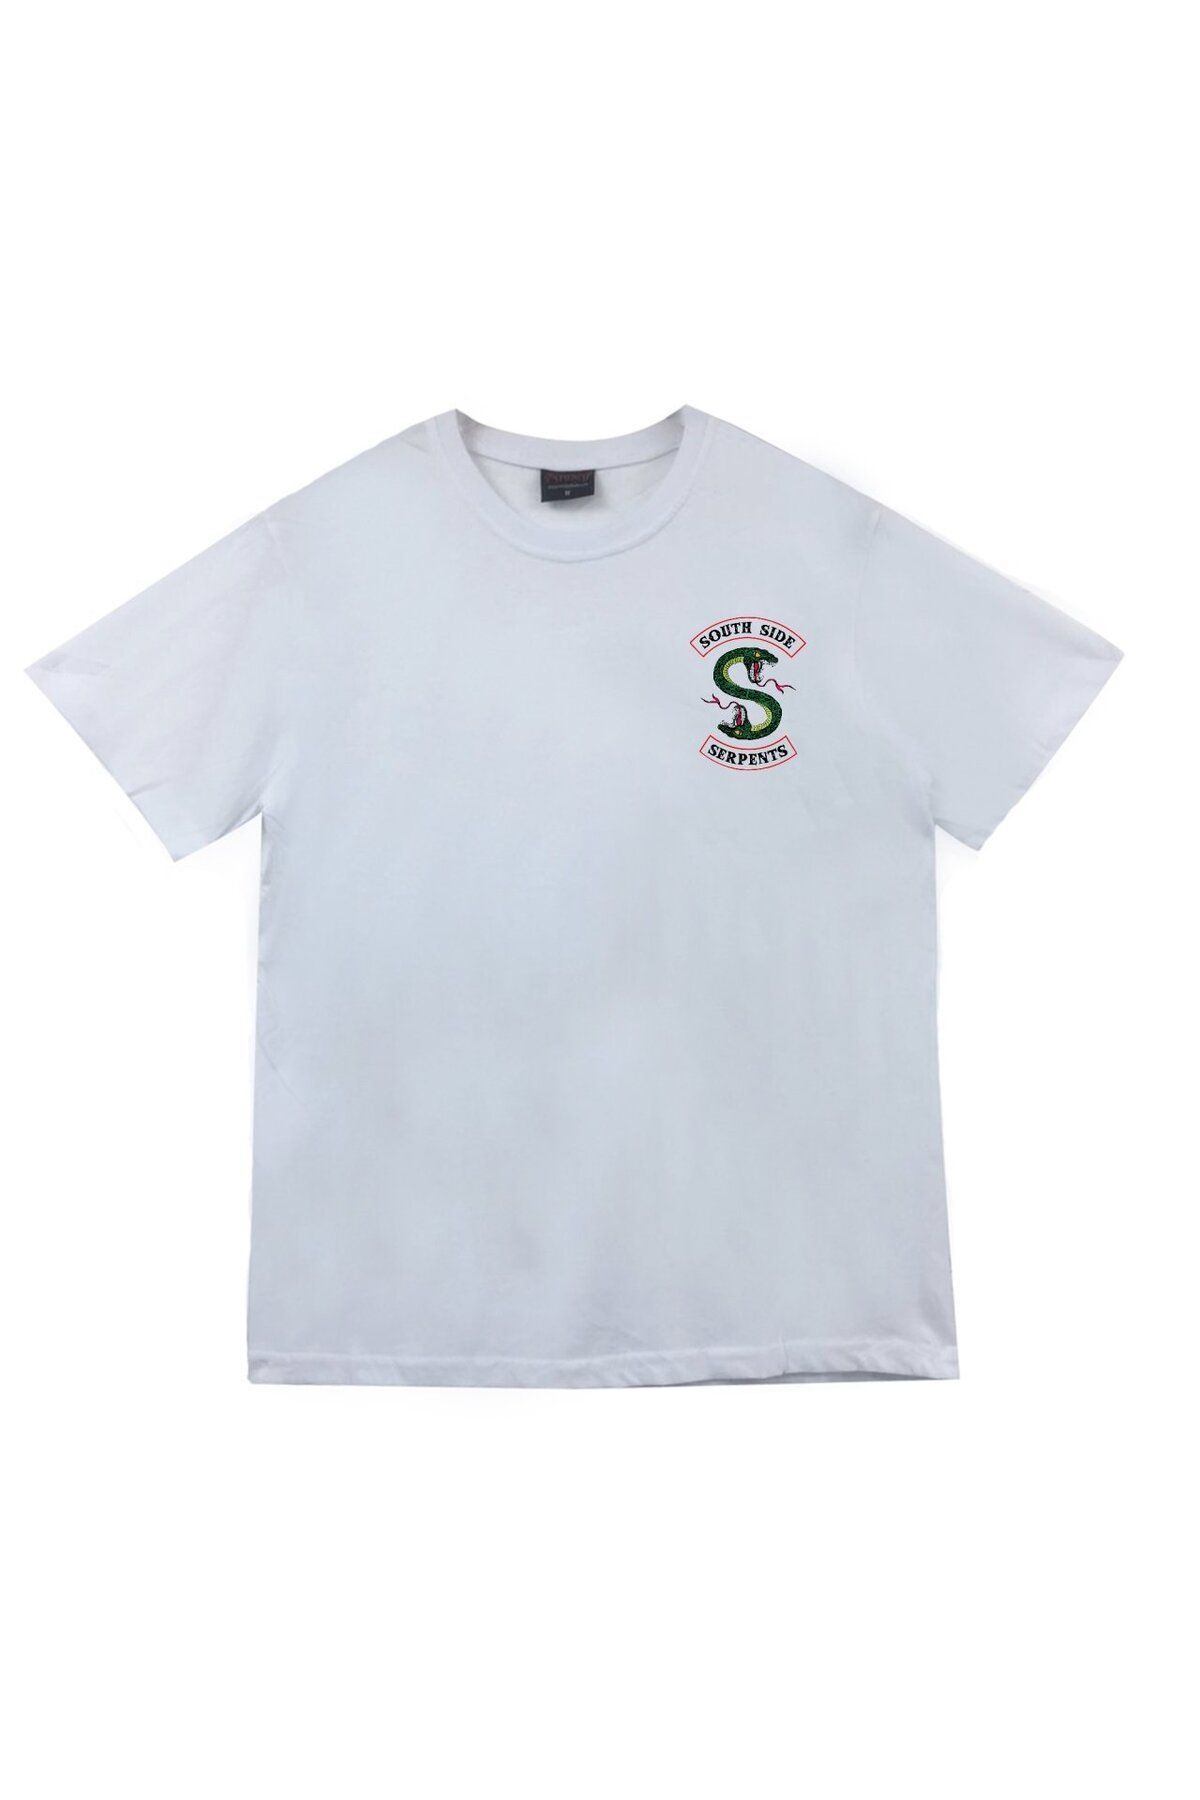 fame-stoned Unisex Beyaz Riverdale Southside Serpents Baskılı T-shirt